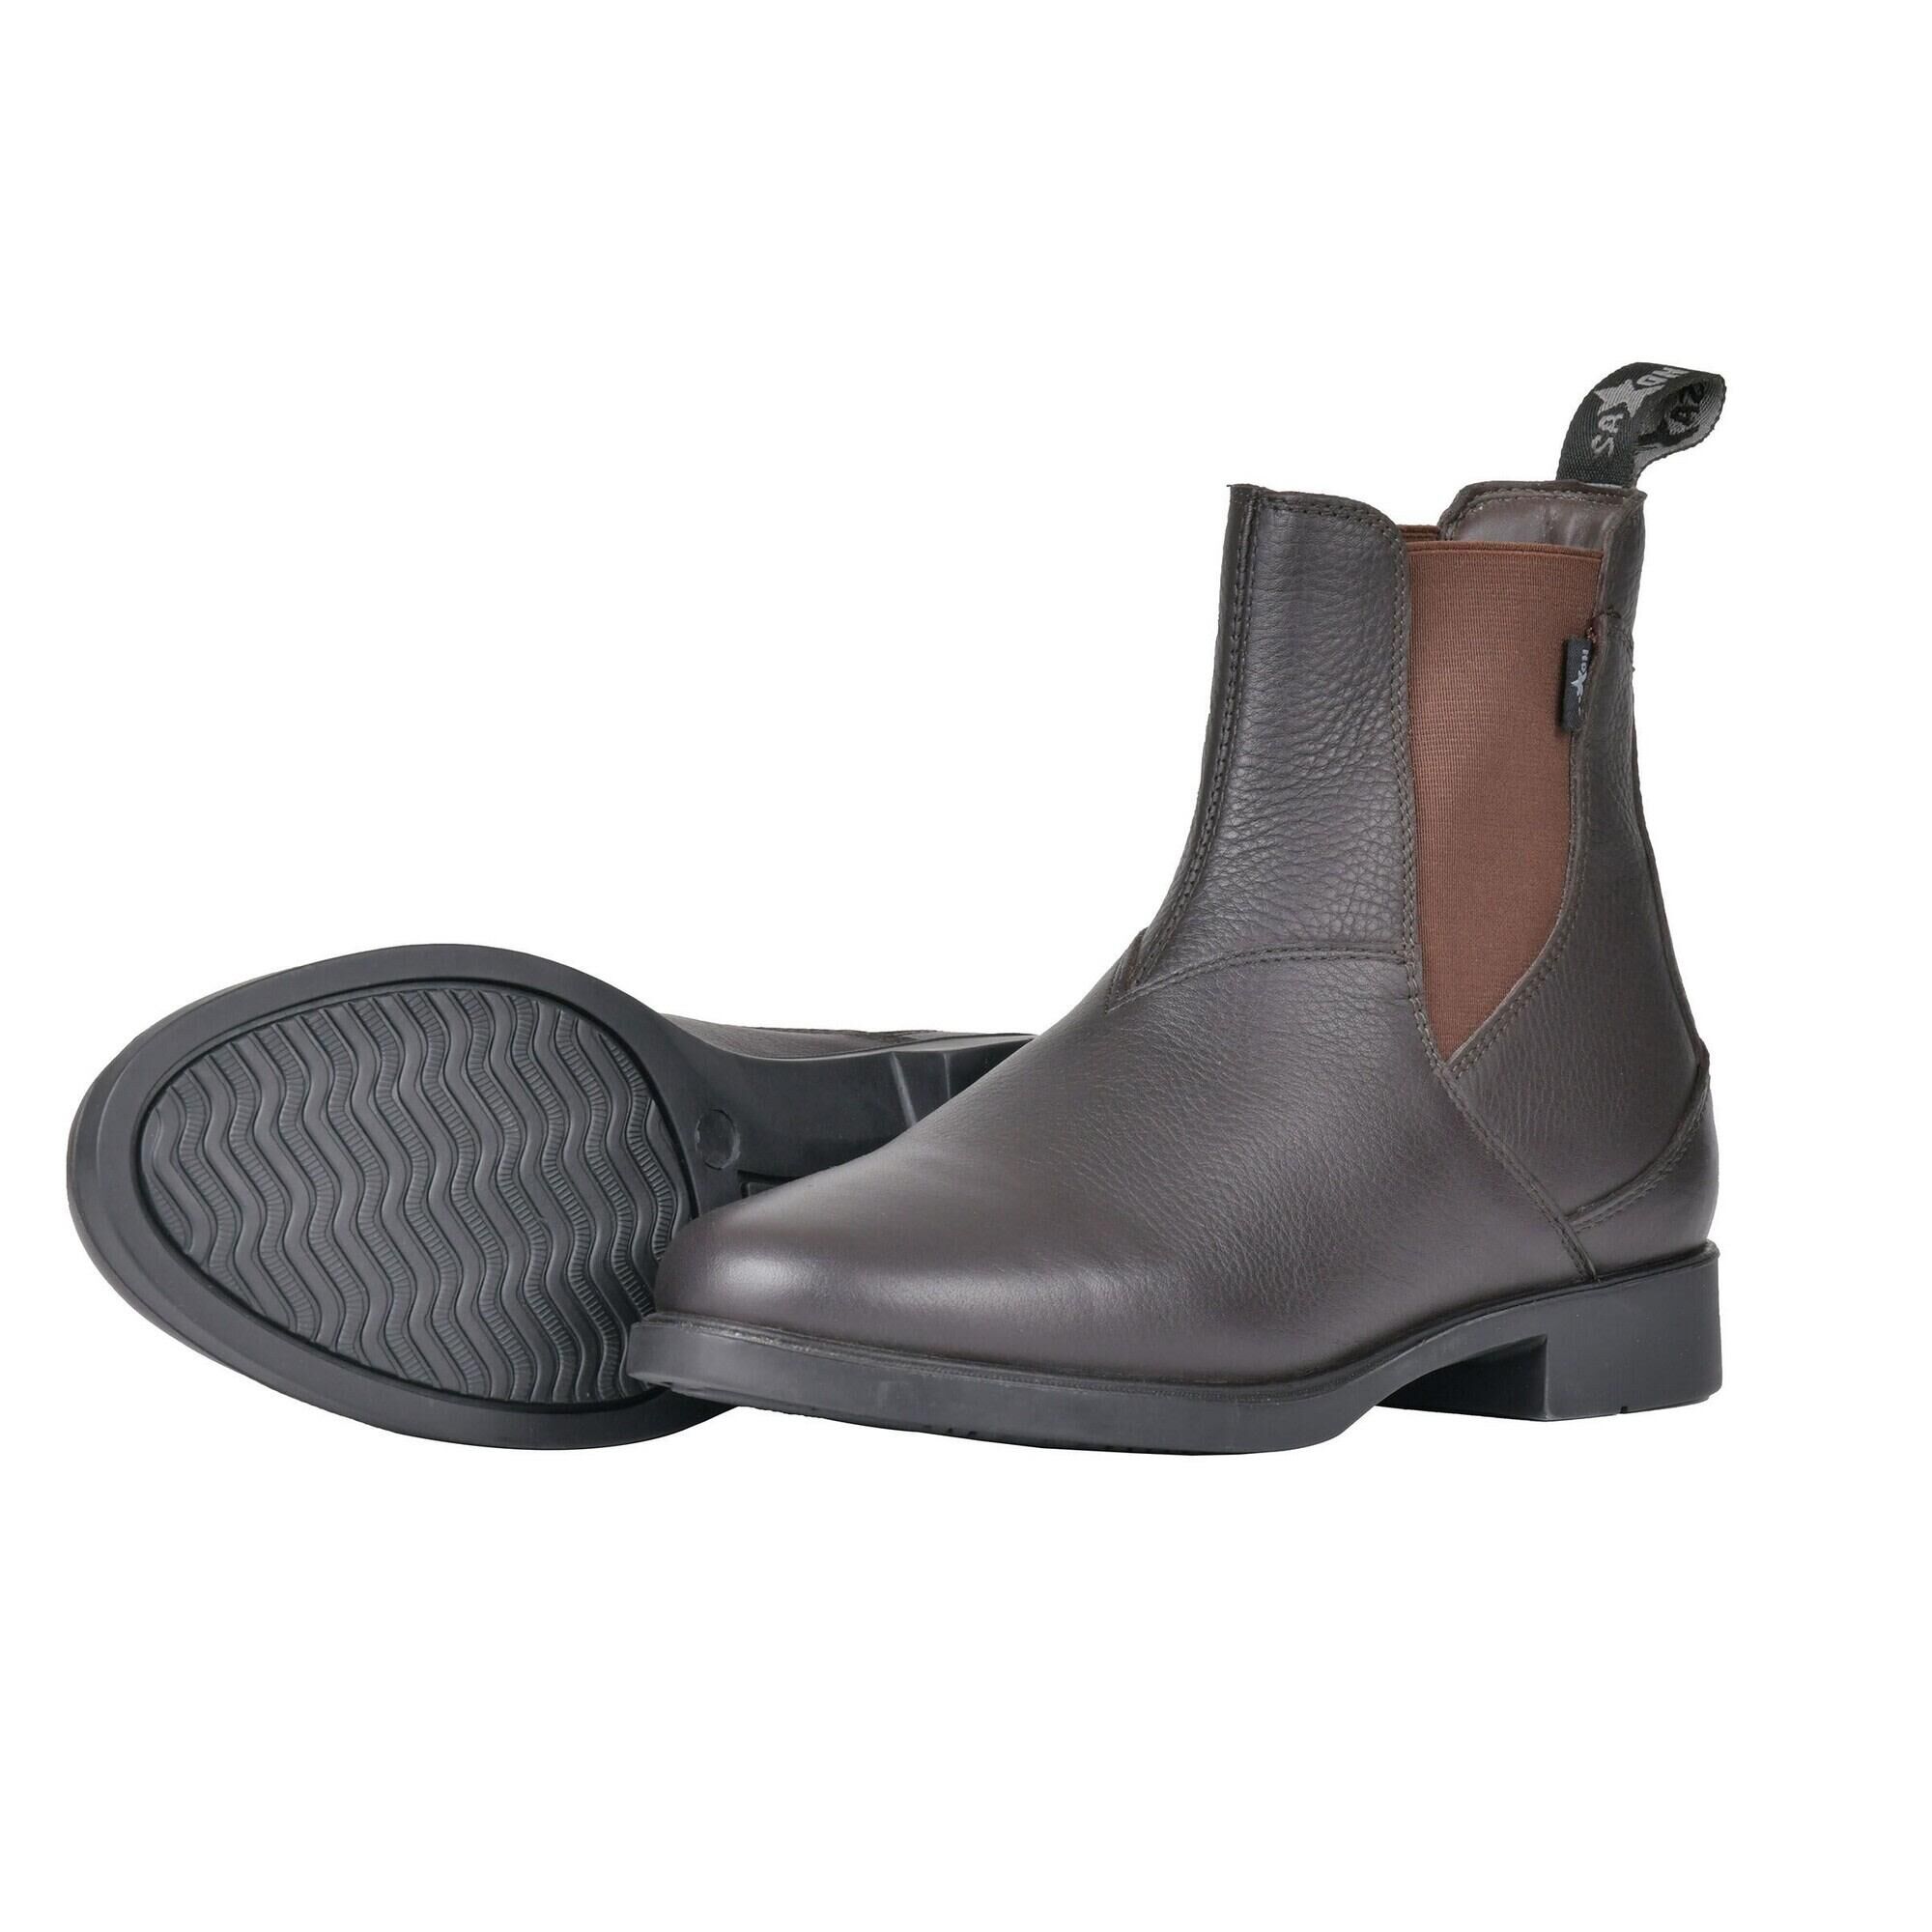 SAXON Unisex Adult Allyn Leather Jodhpur Boots (Brown)